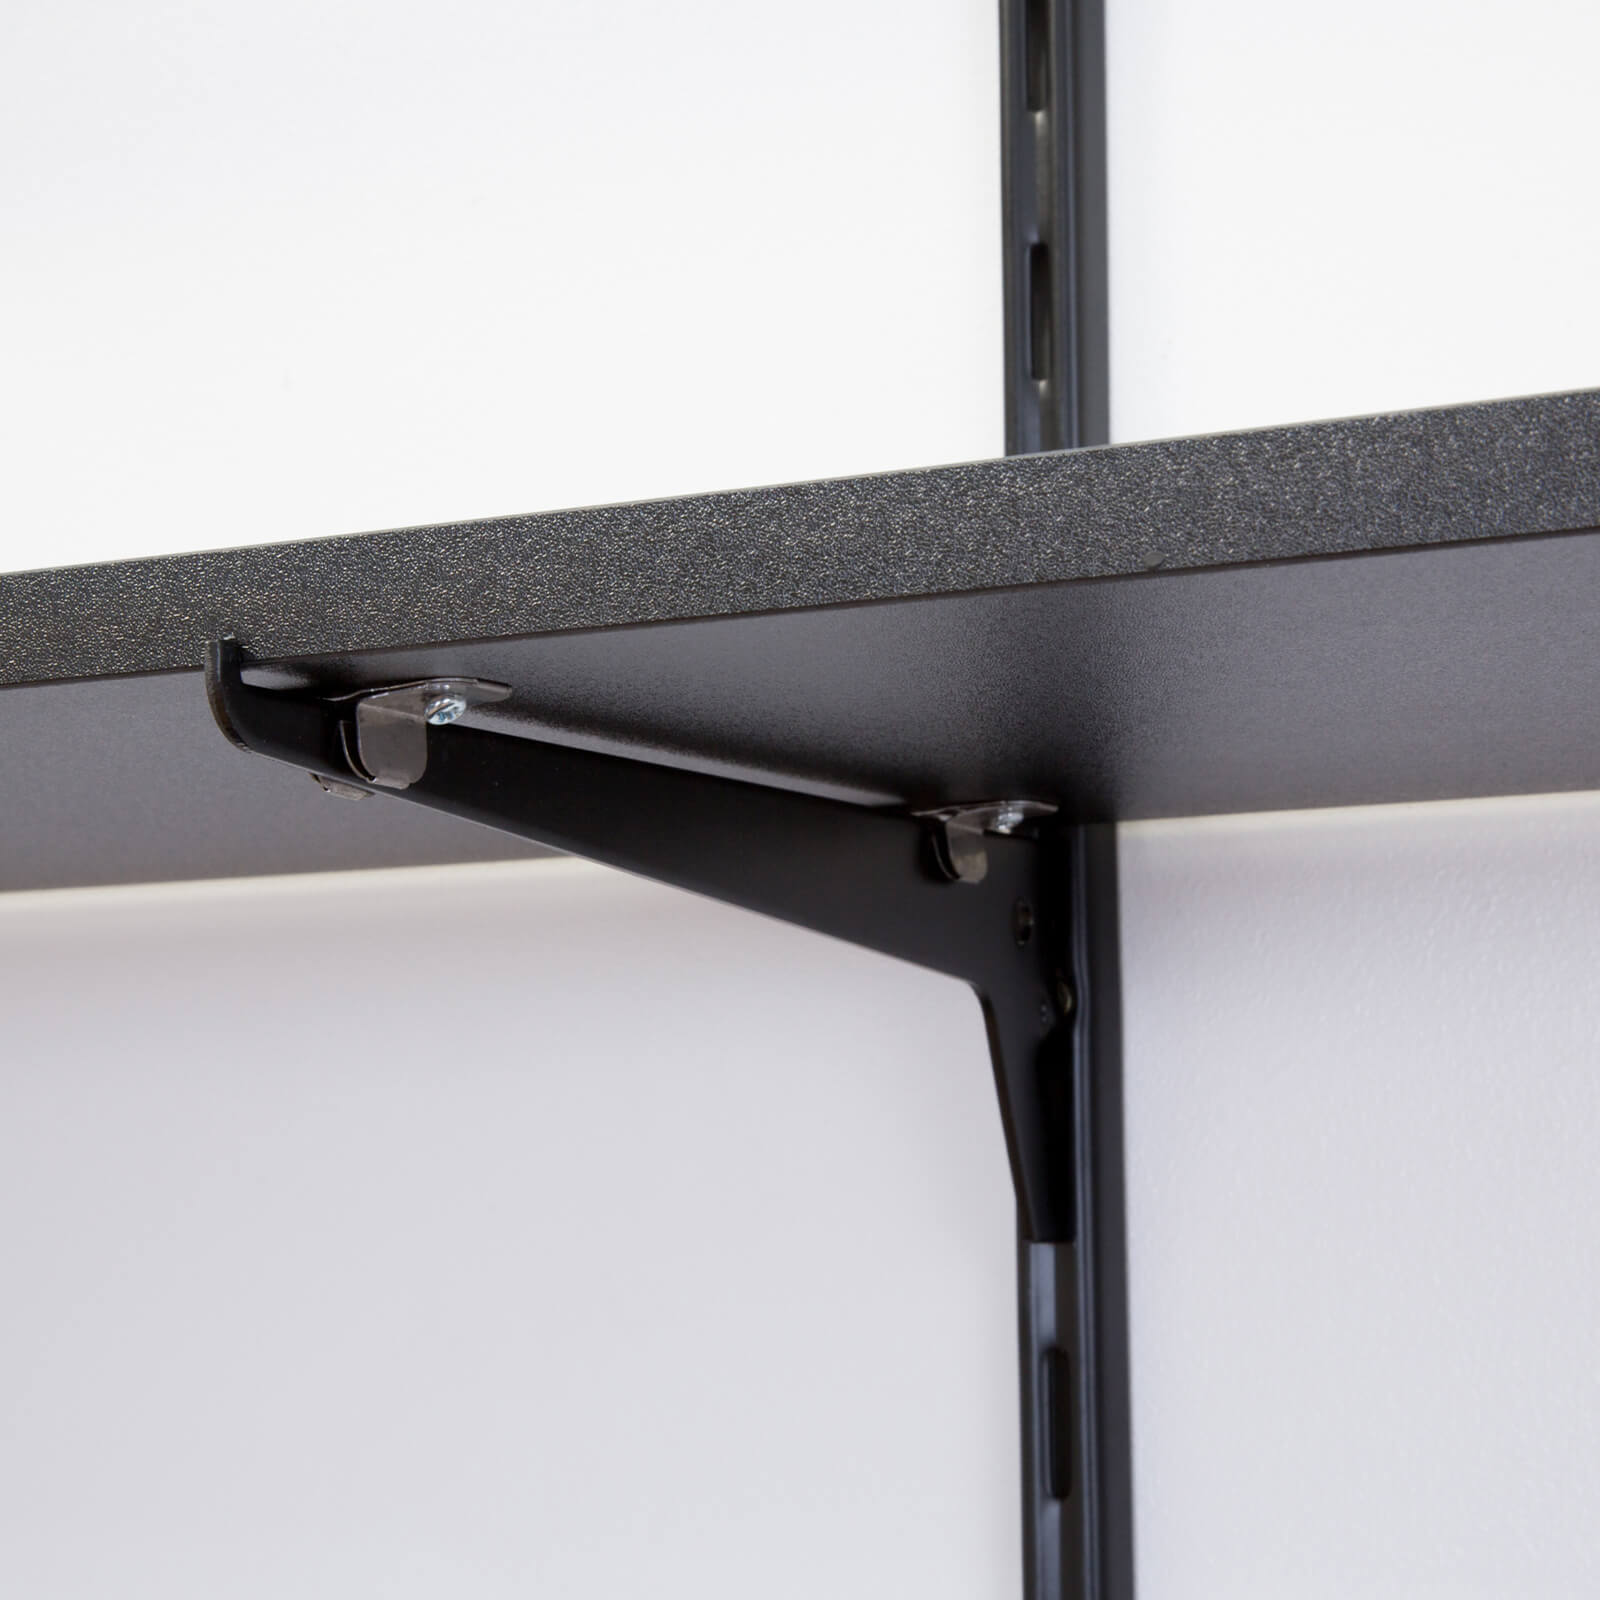 Single Slot Upright Wall Strip - Black - 100cm